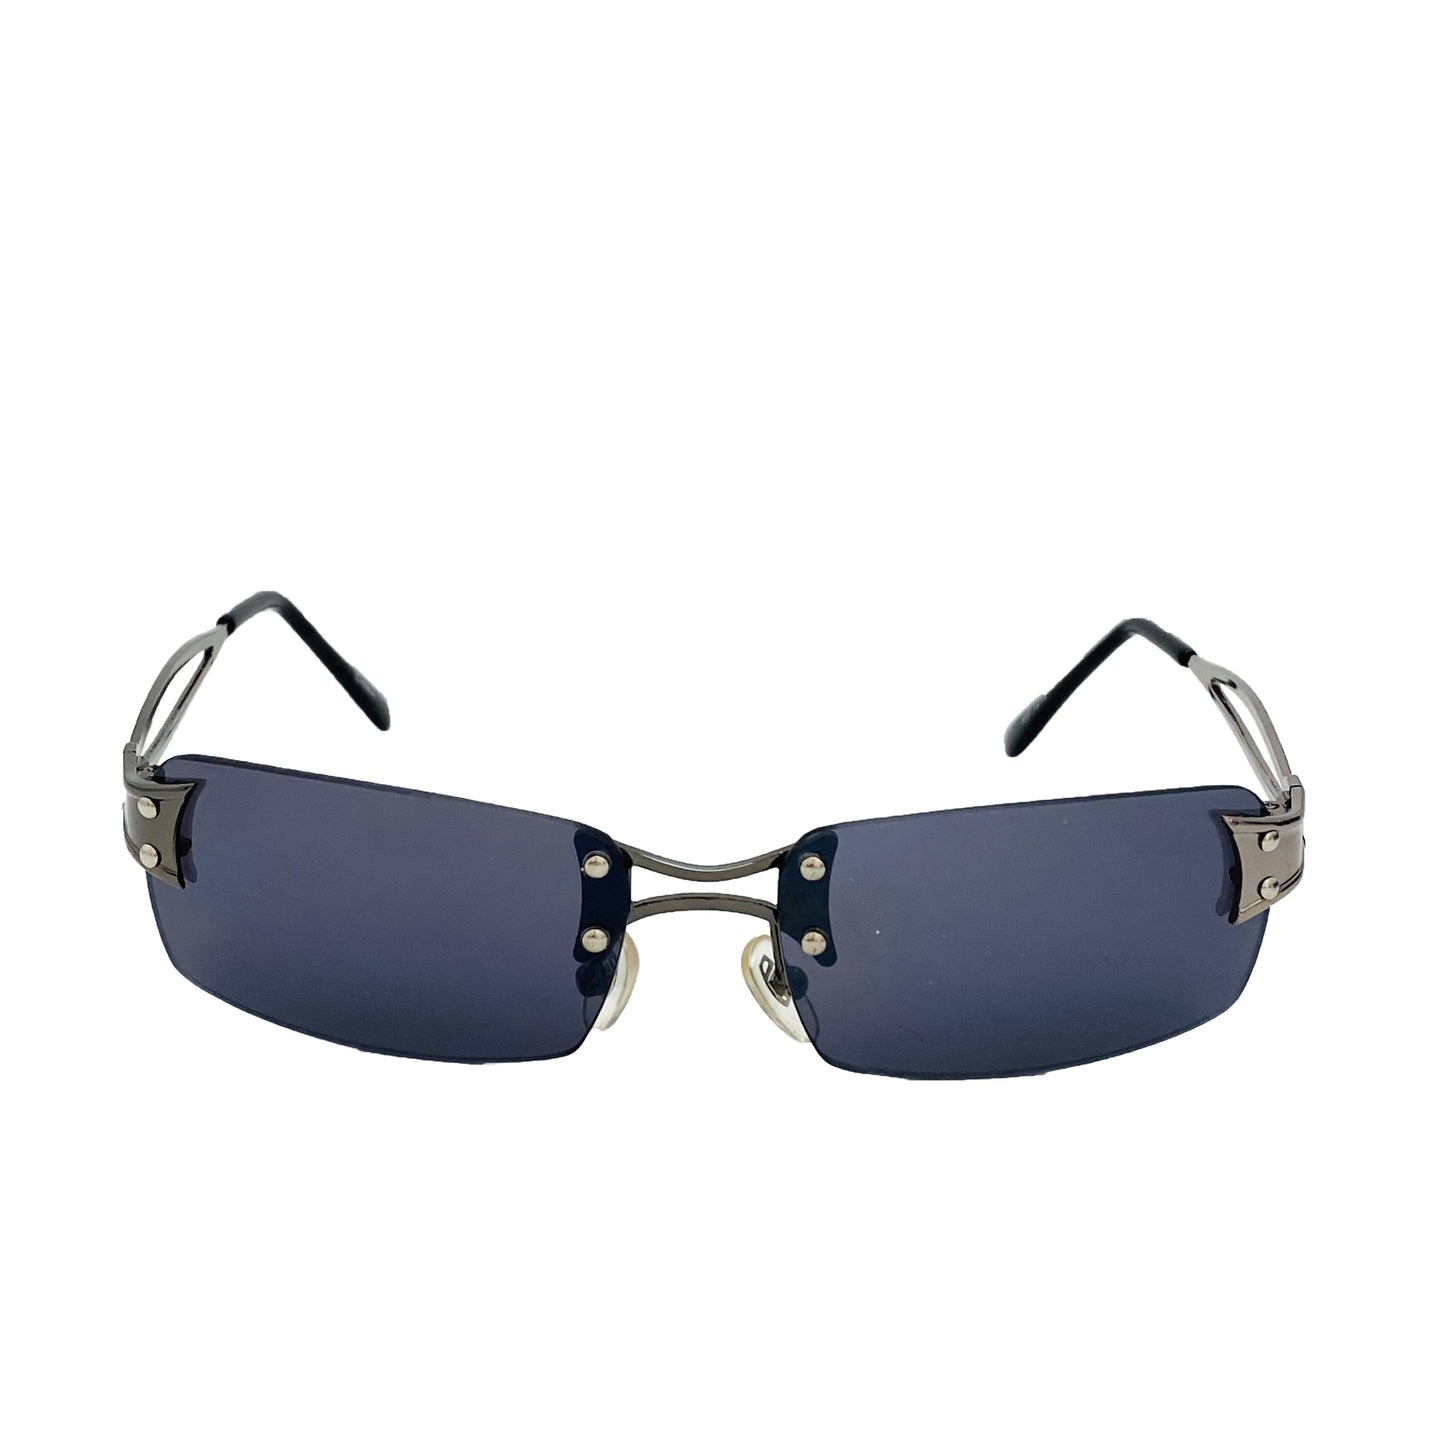 cyber y2k style, grey lens, frameless, genuine vintage sunglasses with grey frame